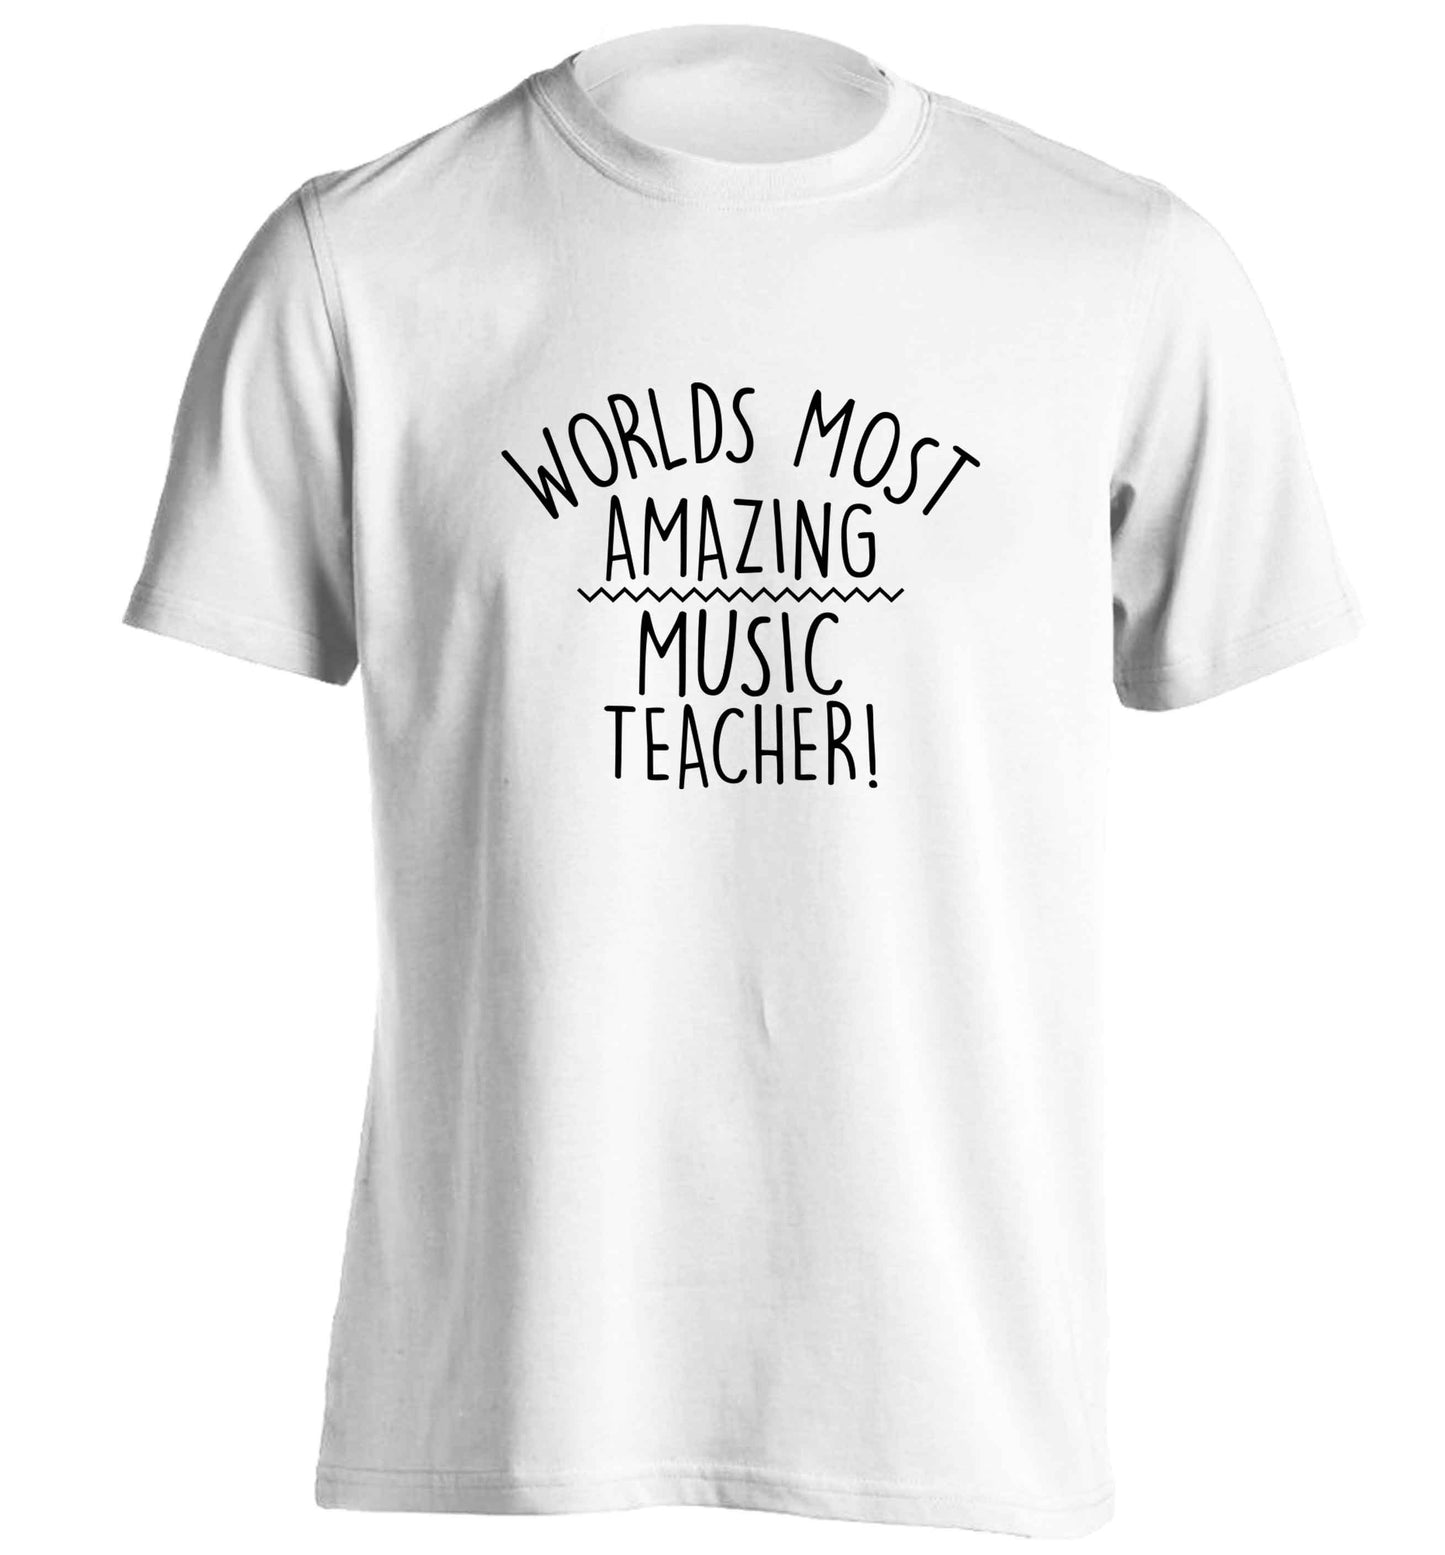 Worlds most amazing music teacher adults unisex white Tshirt 2XL